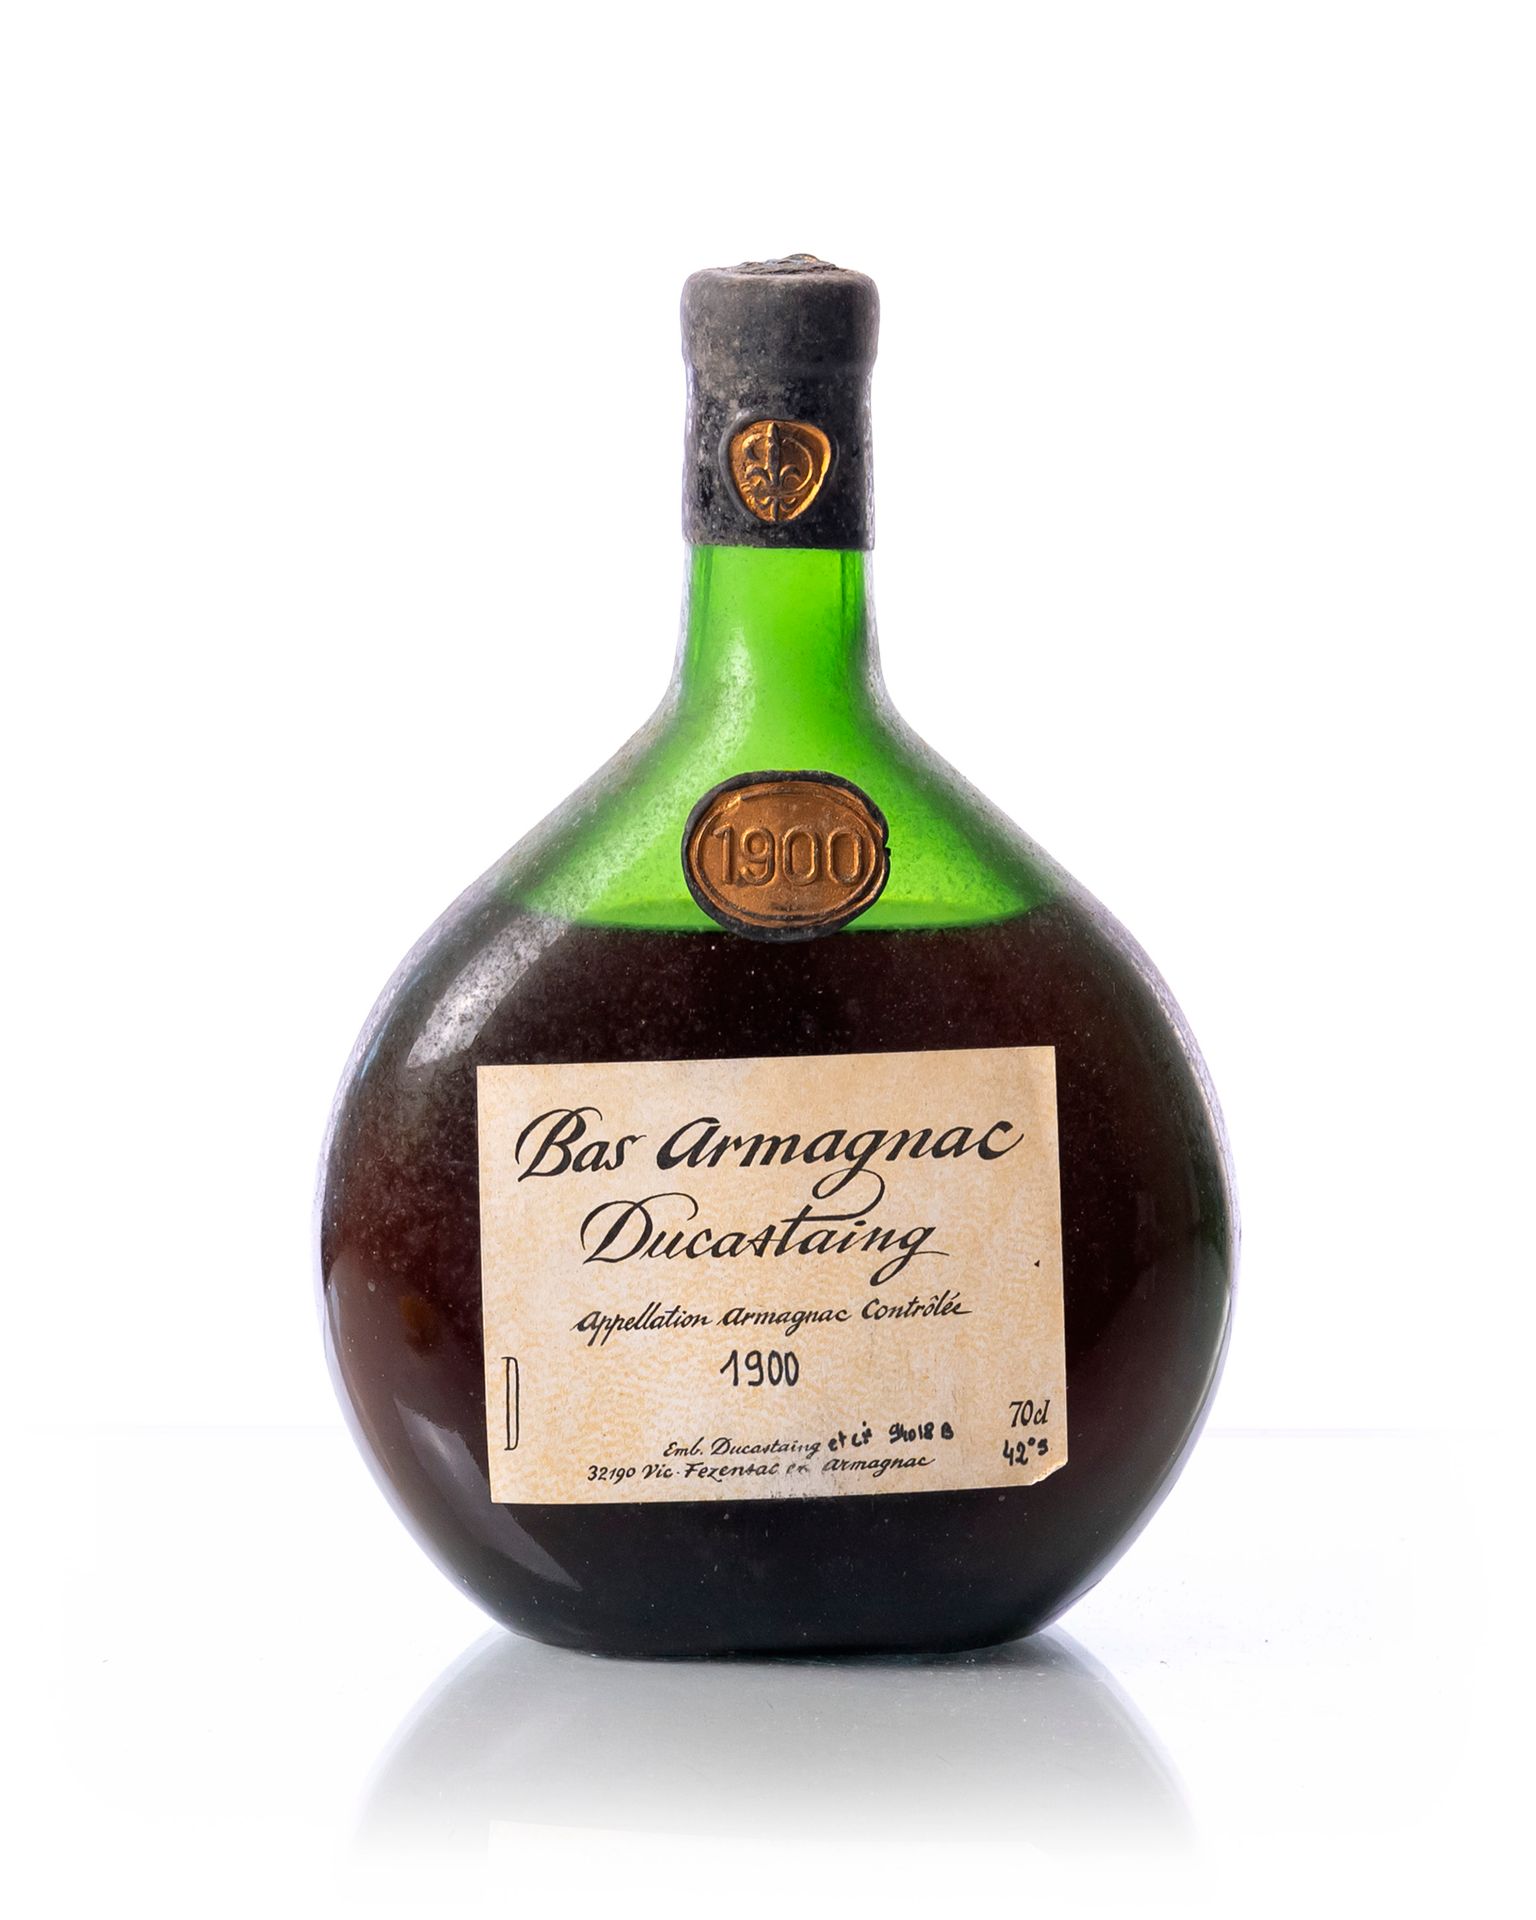 Null 1 bottle (70 cl. - 42,5°) BAS-ARMAGNAC DUCASTAING
Year : 1900
Appellation :&hellip;